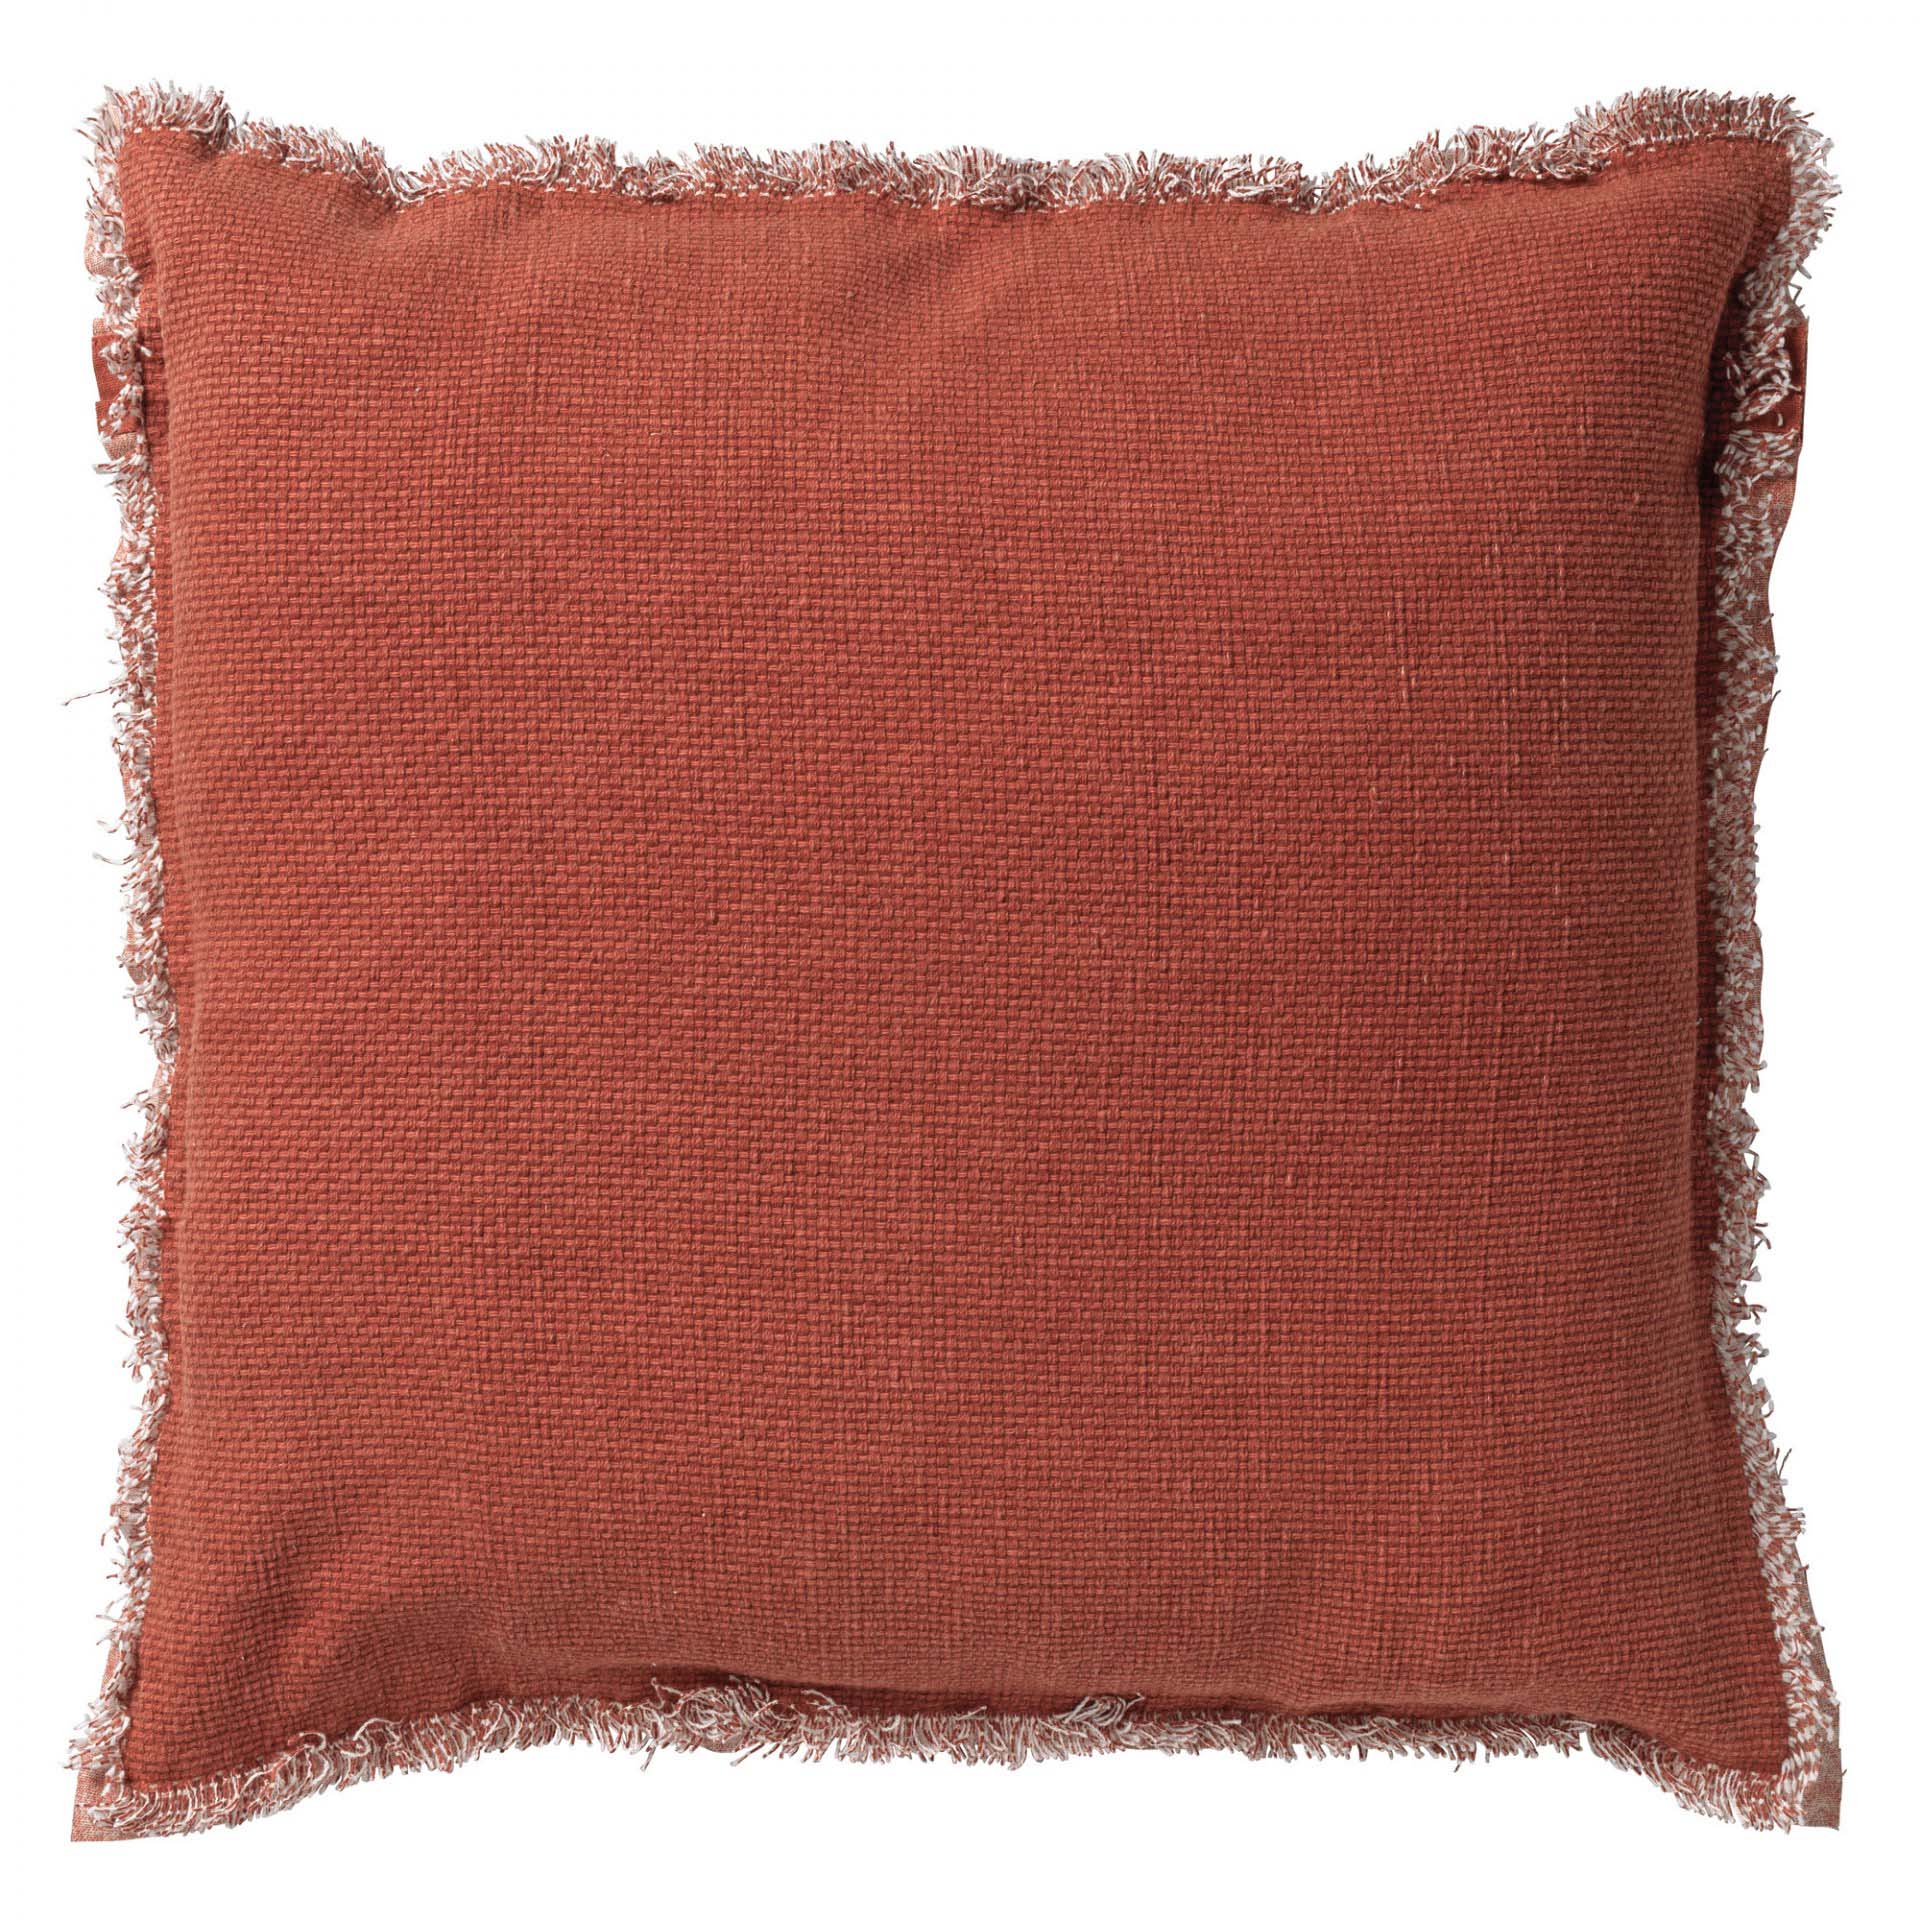 BURTO - Cushion 45x45 cm Potters Clay - orange-terracotta